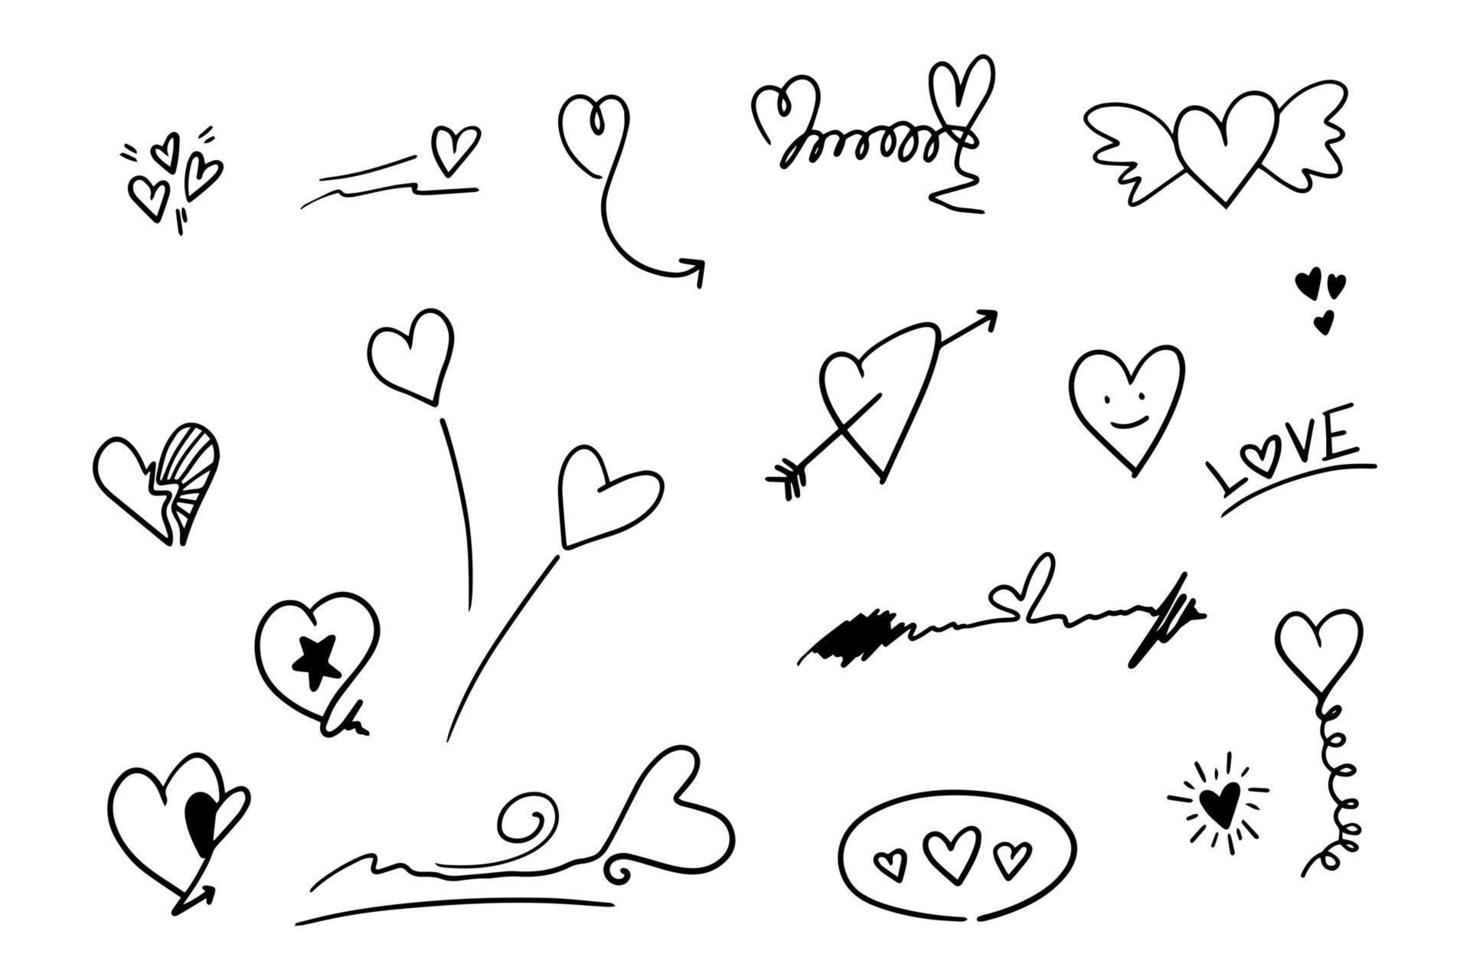 Heart doodle, Love, Vector Illustration.